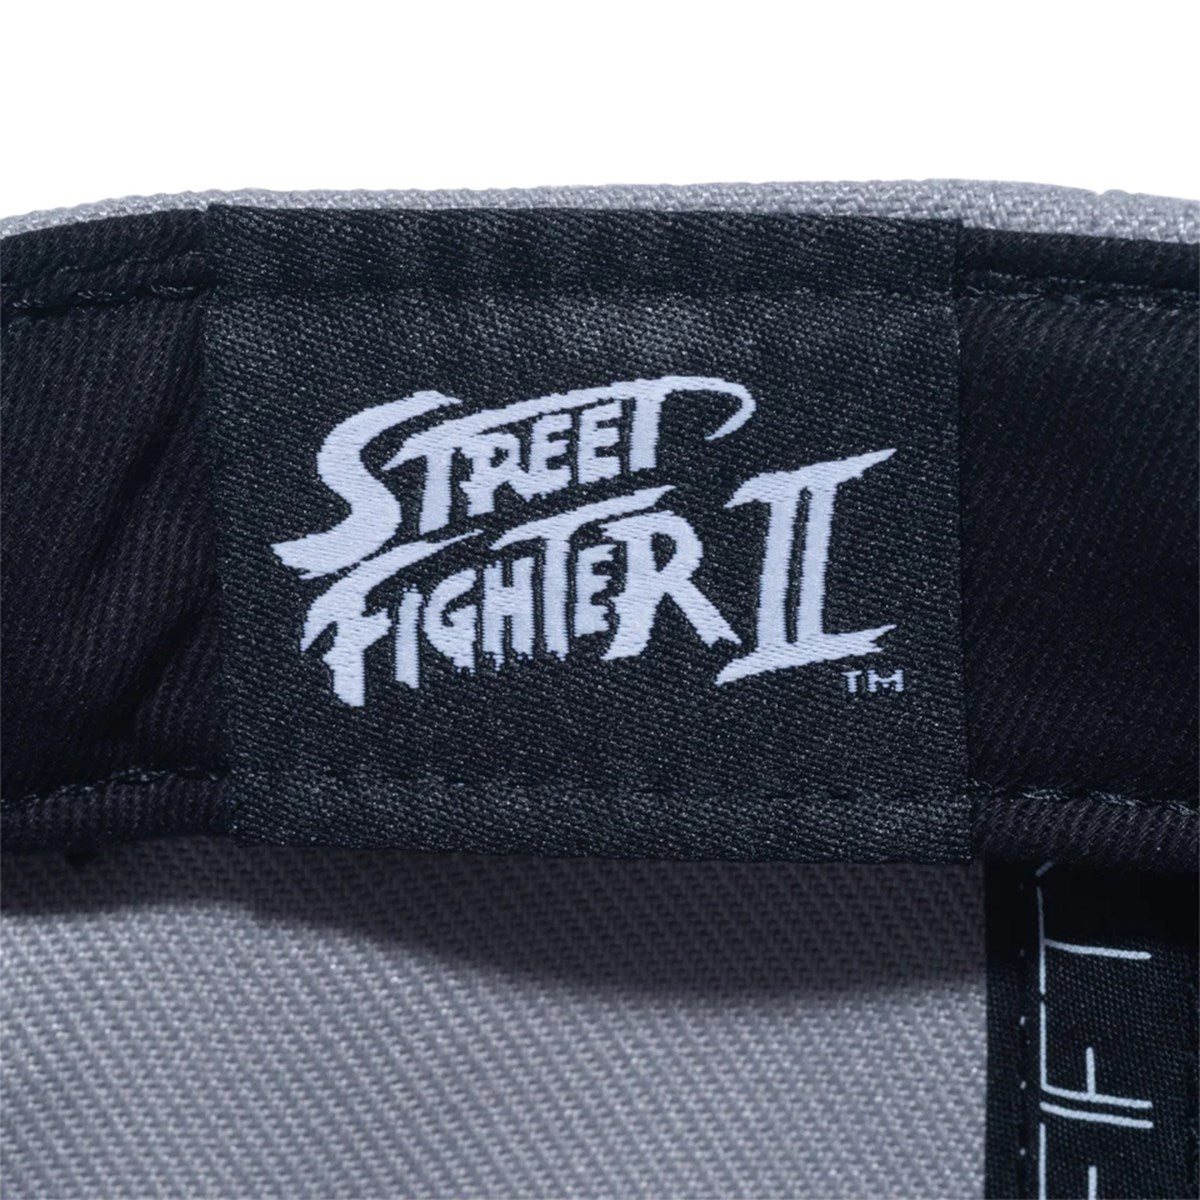 NEW ERA × STREET FIGHTER II - 9FIFTY SF2 RYU Street Fighter 2 Ryu GRY BLK [14125281]